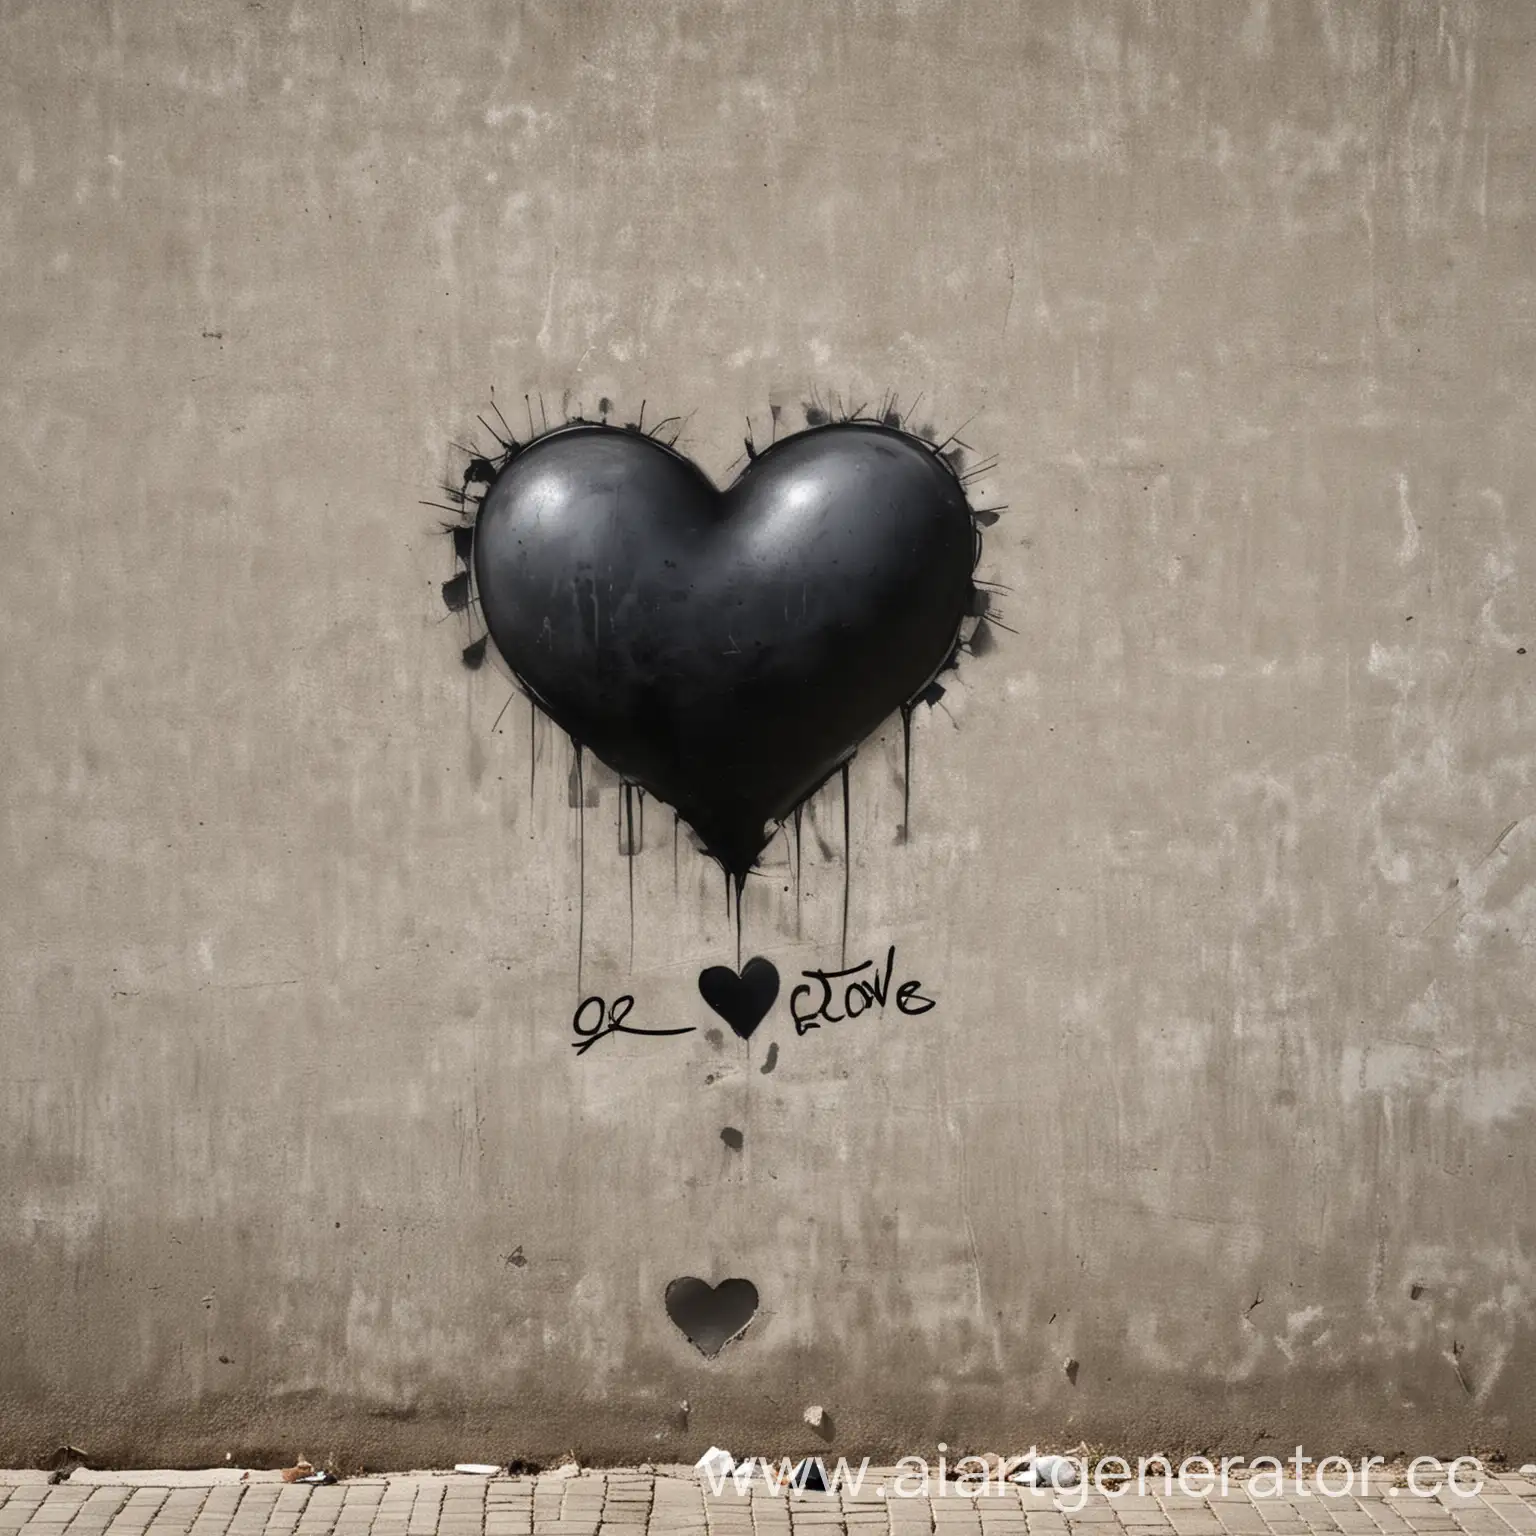 Urban-Graffiti-Art-9ROSELOVE-Inscription-with-Minimalist-Black-Heart